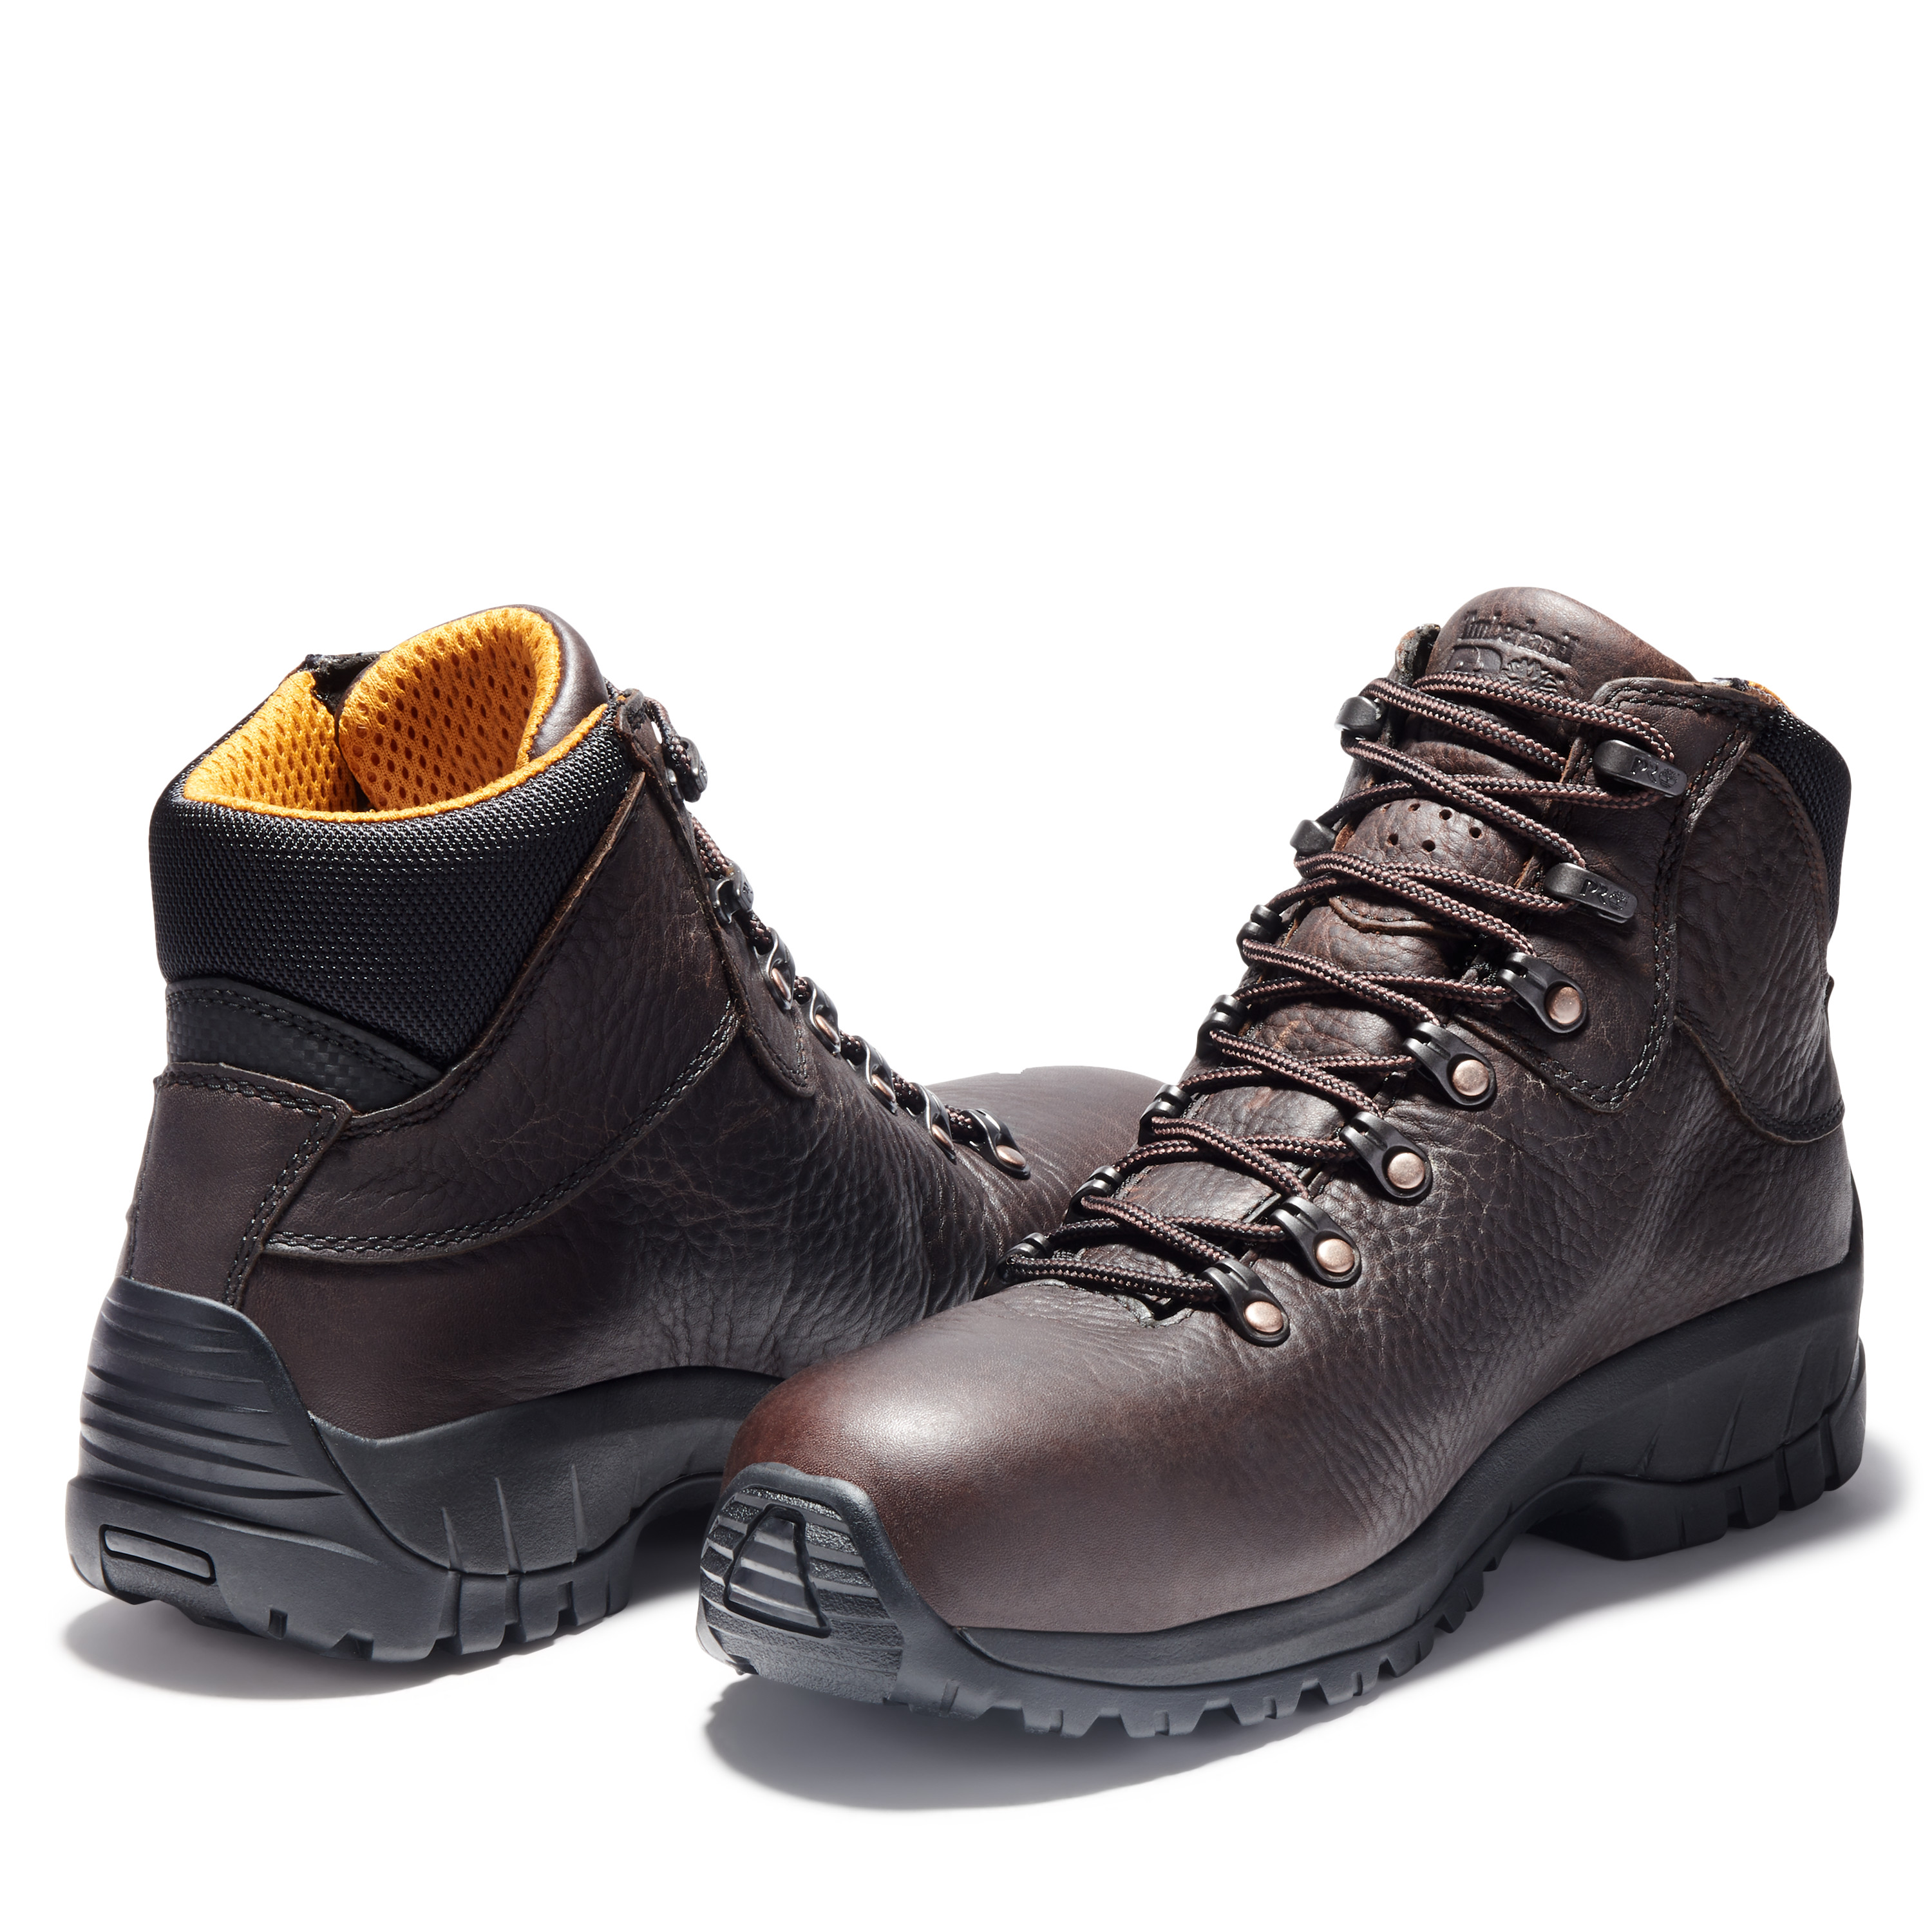 Timberland PRO Men's TiTAN Trekker Alloy Toe Waterproof Work Boots from GME Supply